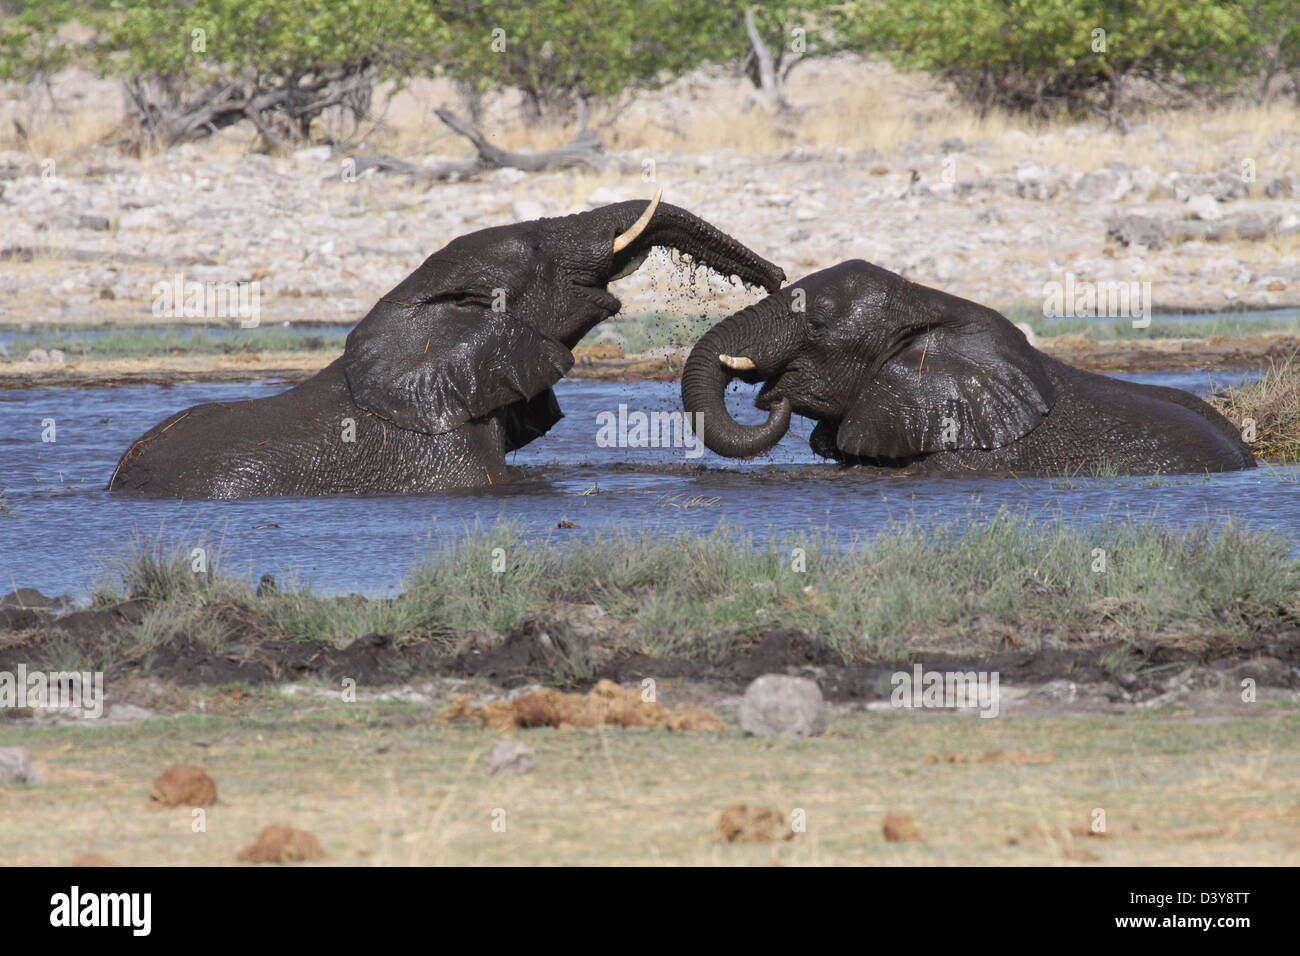 Elephants at play in a water hole, Etosha National Park Stock Photo